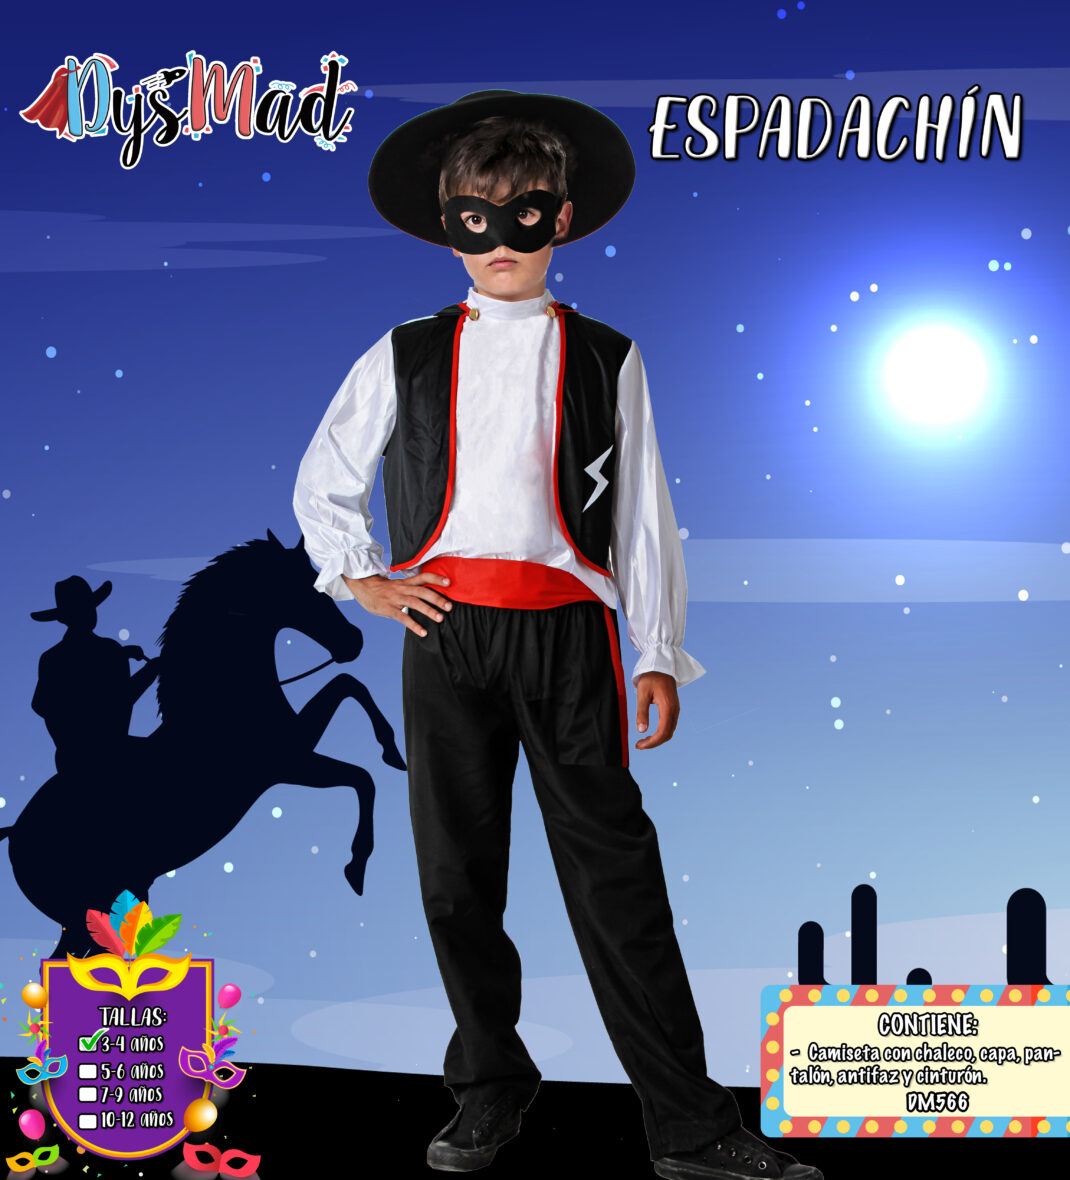 095_Esapadachin-El Zorro1